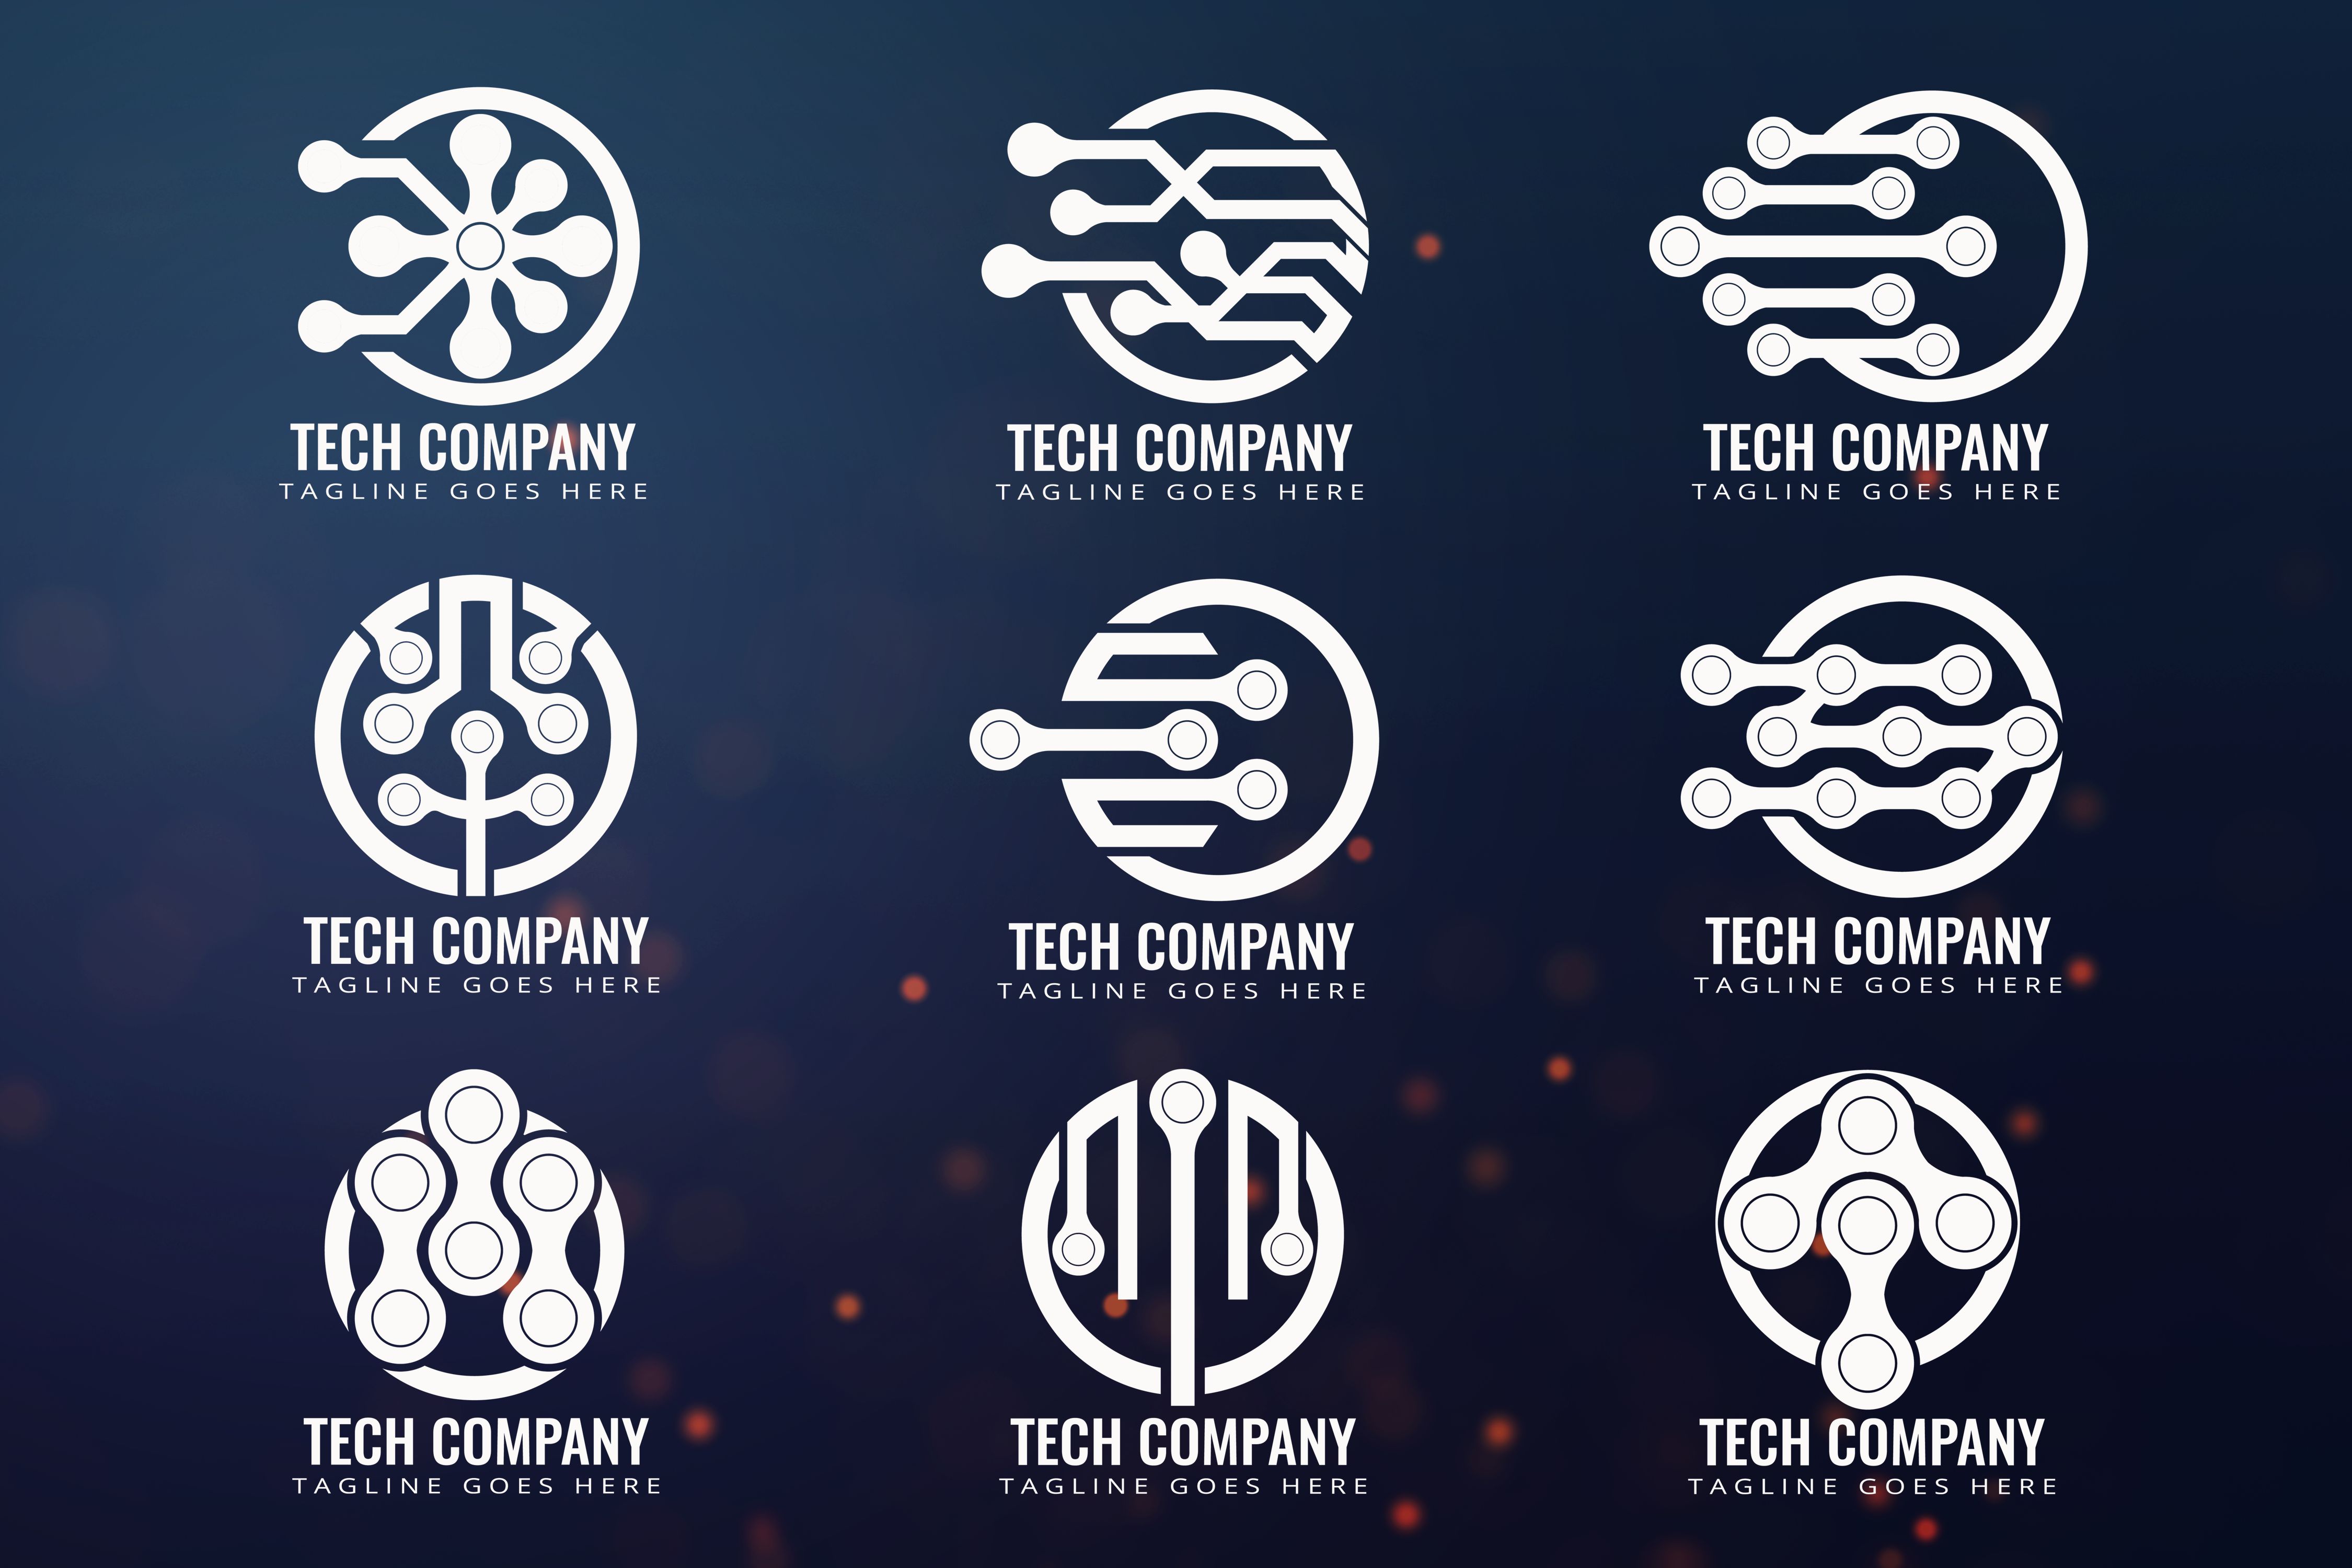 Tech company logo maker - mumucatholic